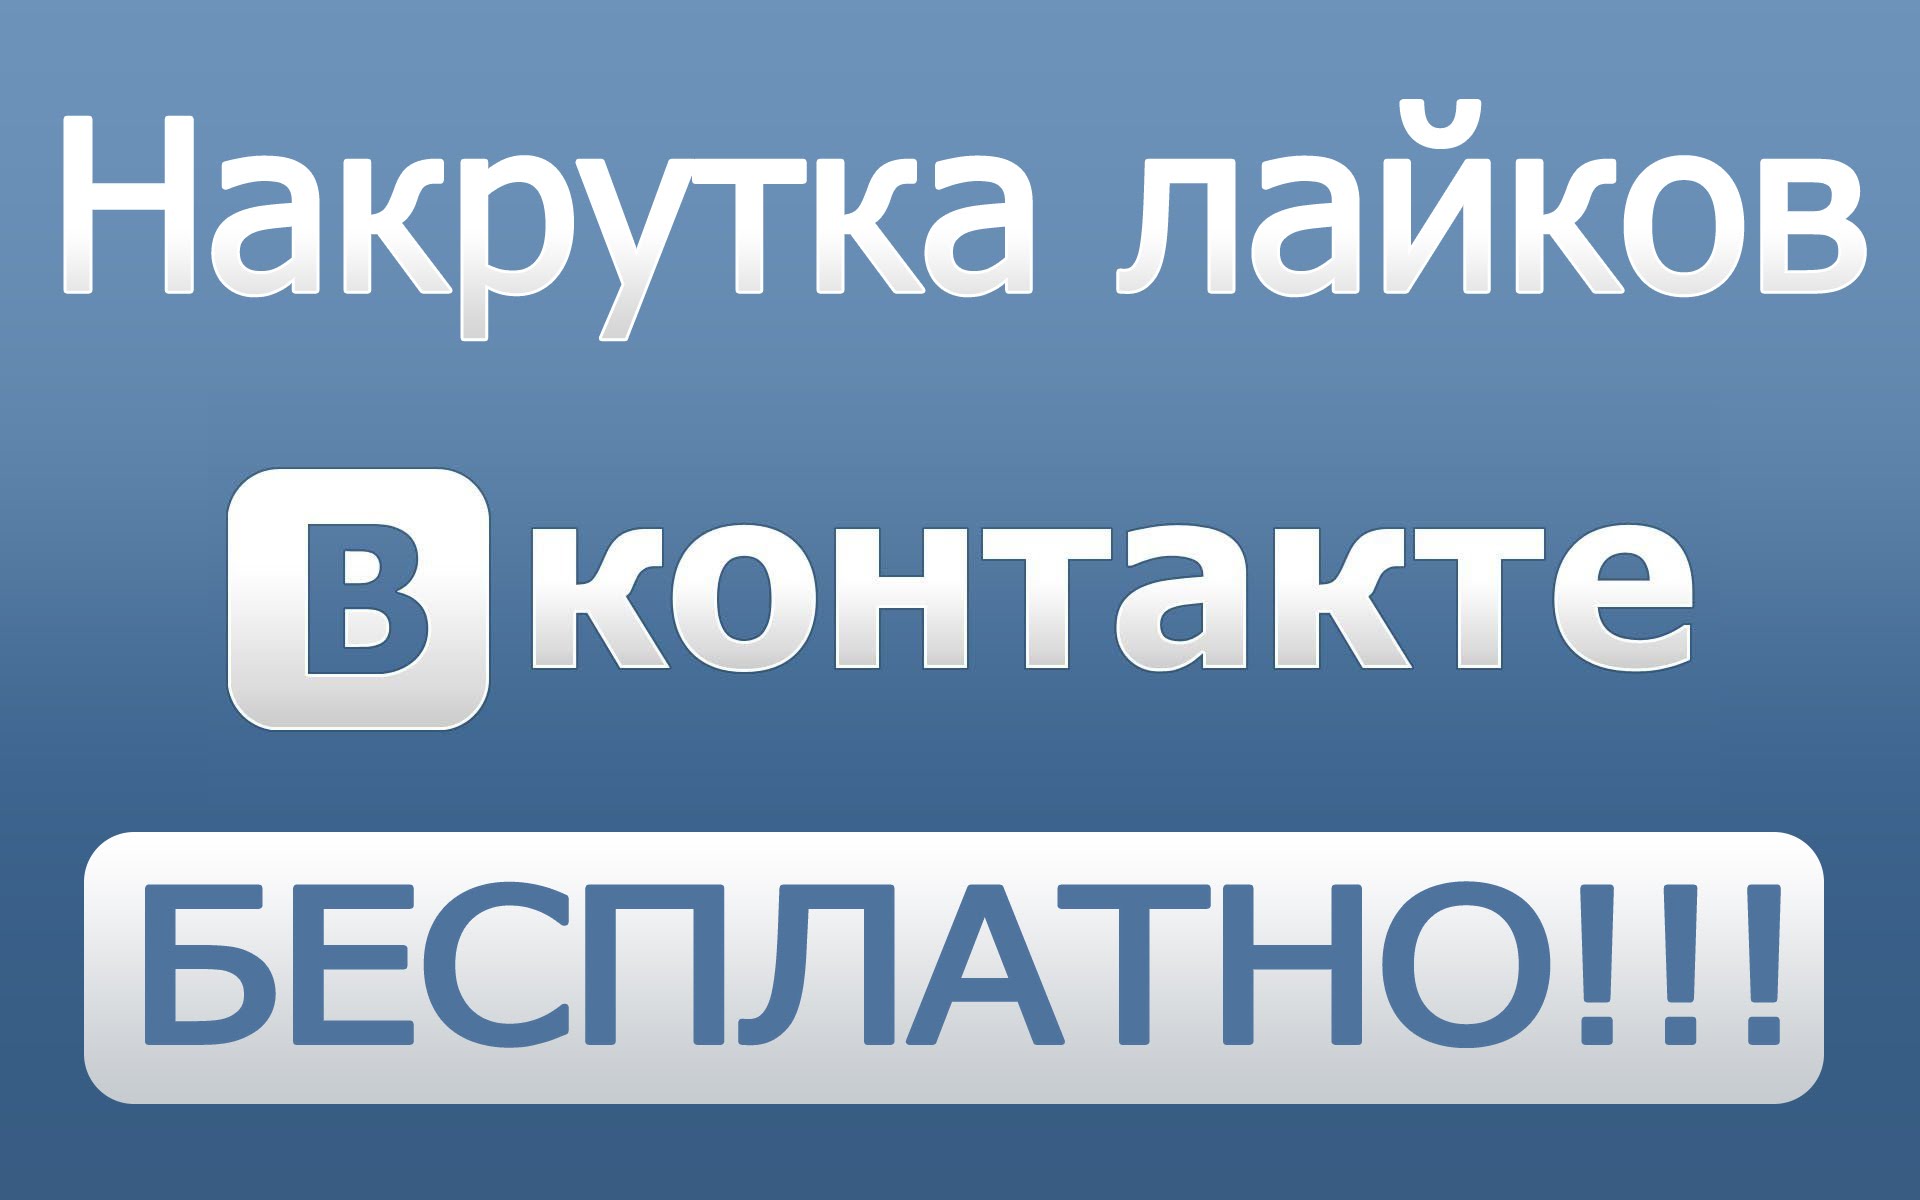 200+ likes VKontakte. Likes vk very cheap, free